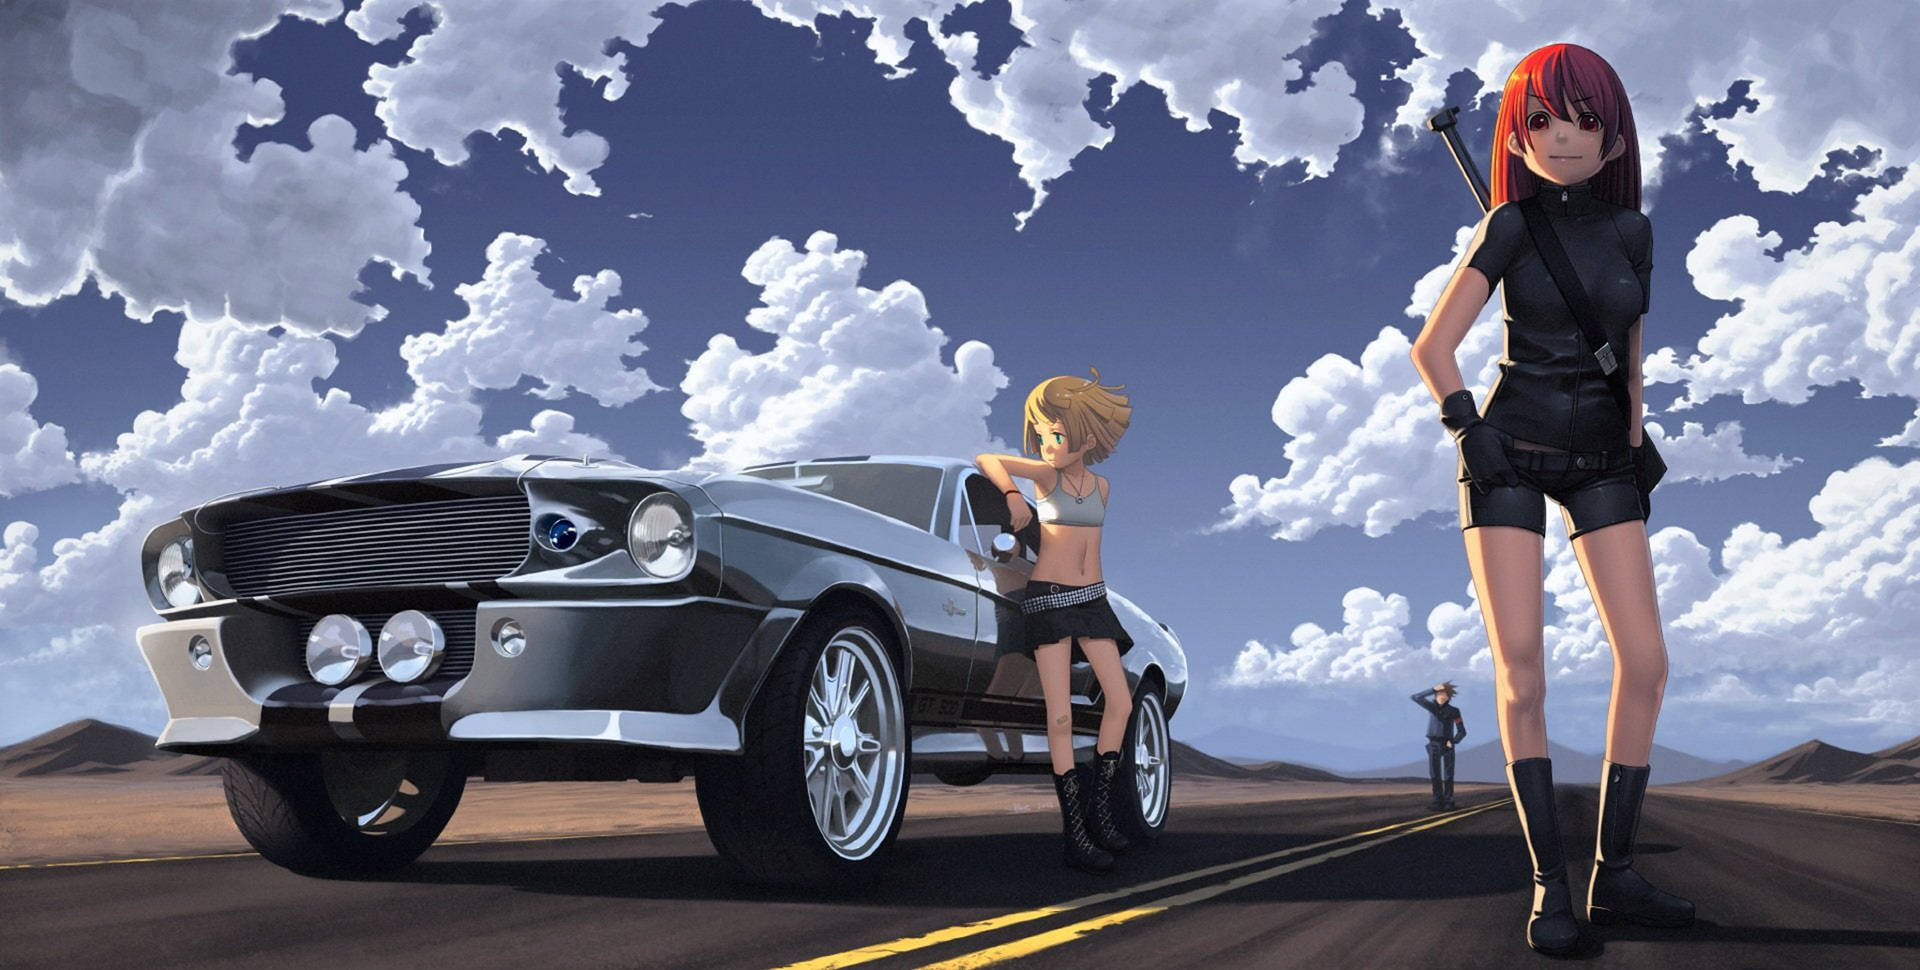 Mustang Anime Car Wallpaper